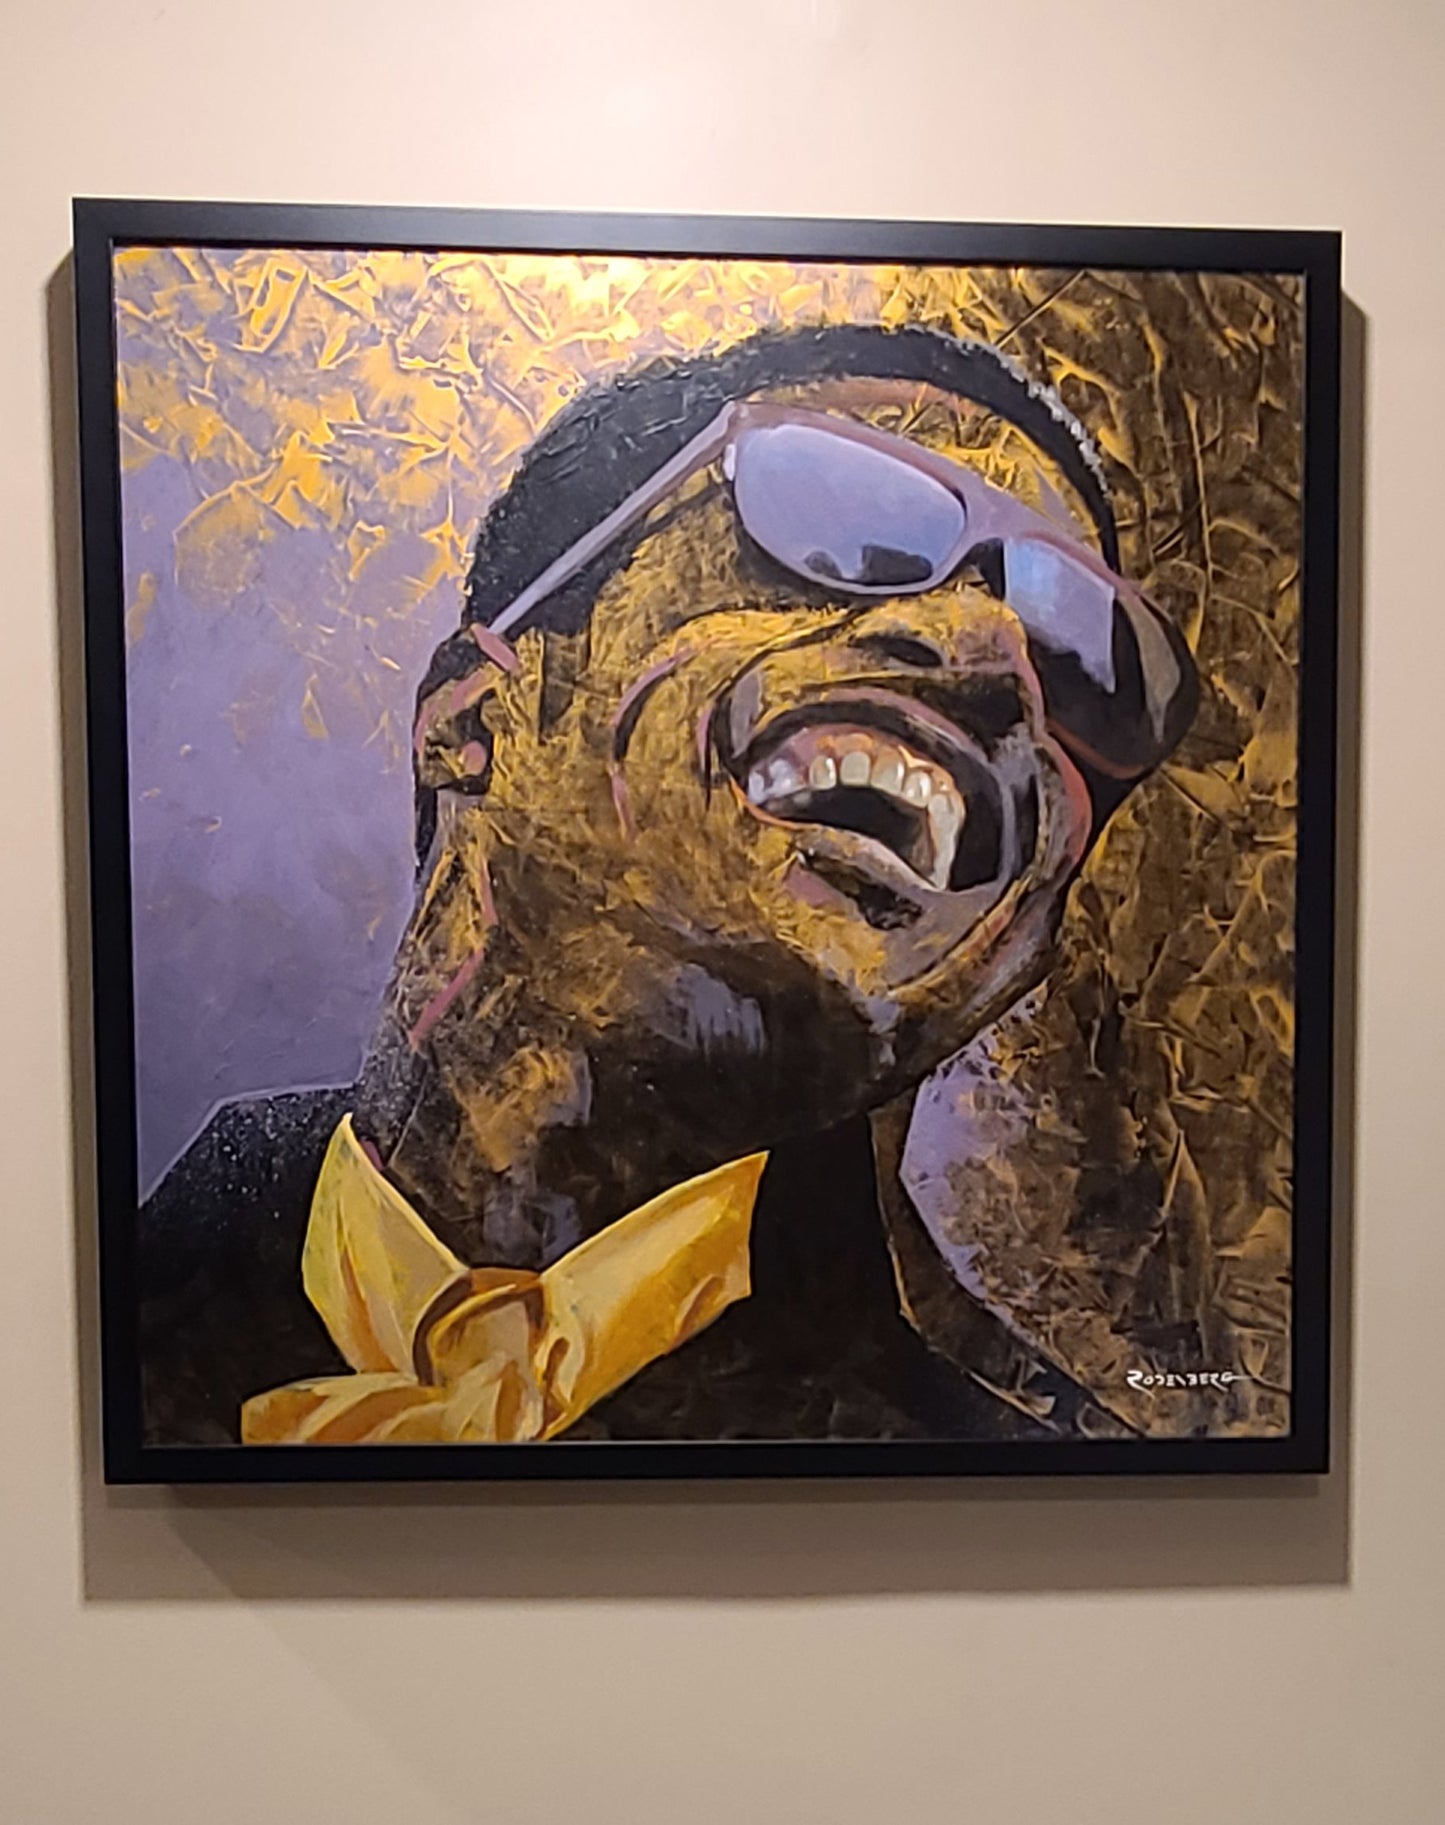  Stevie Wonder painting art by Jeff Rodenberg